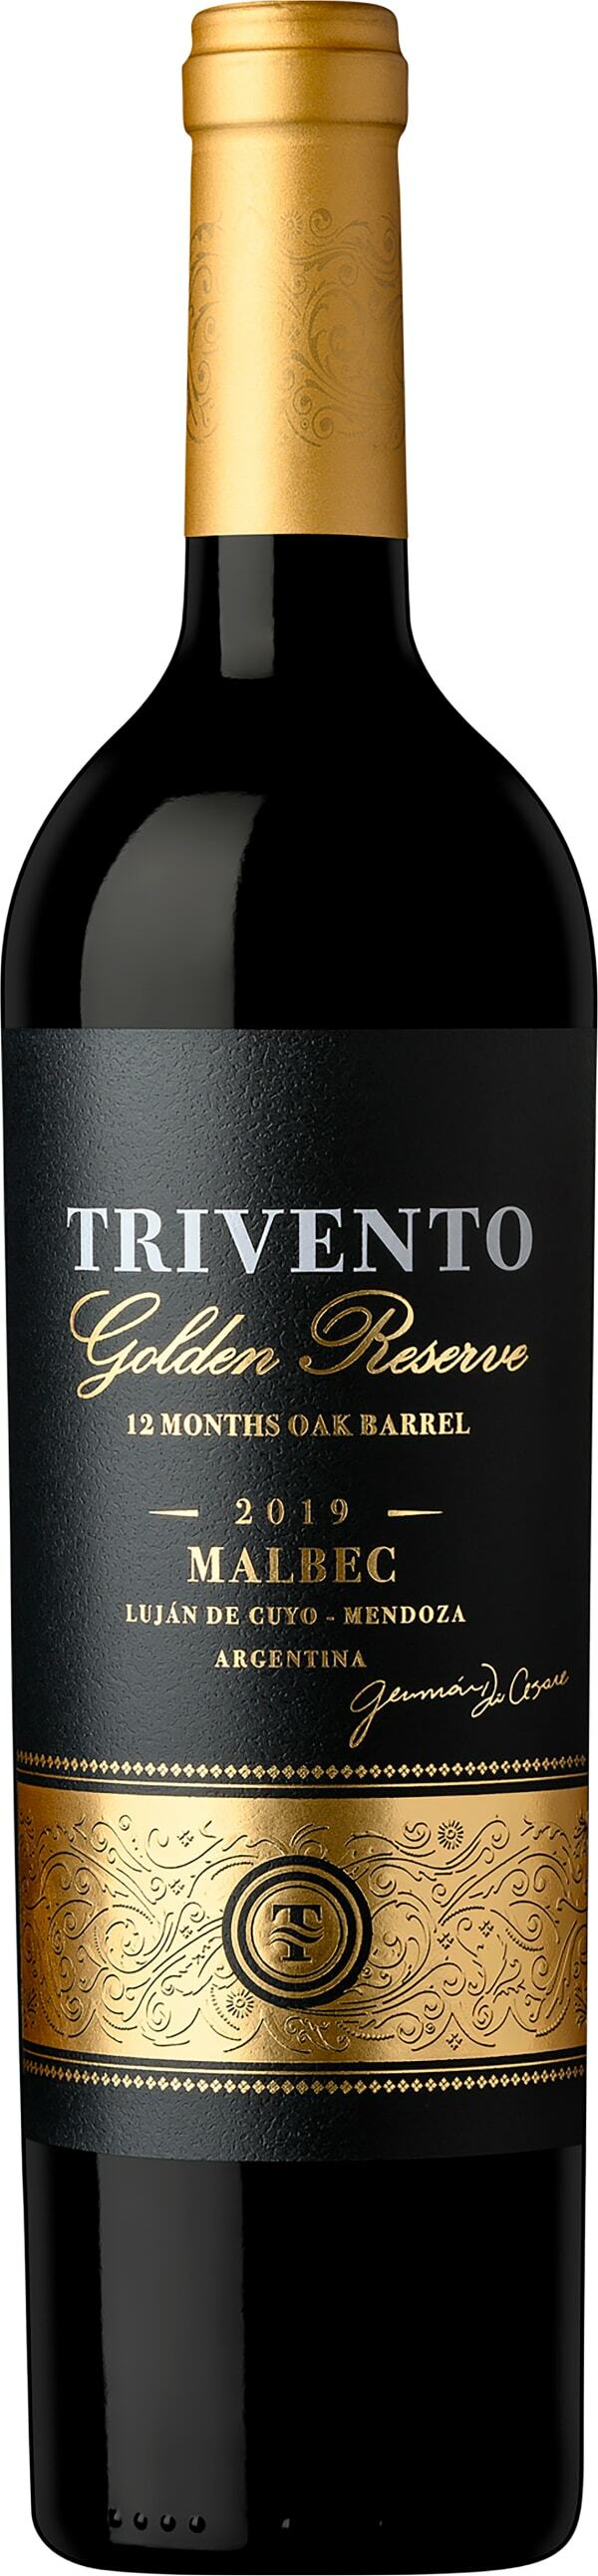 Trivento Golden Reserve Malbec 2019